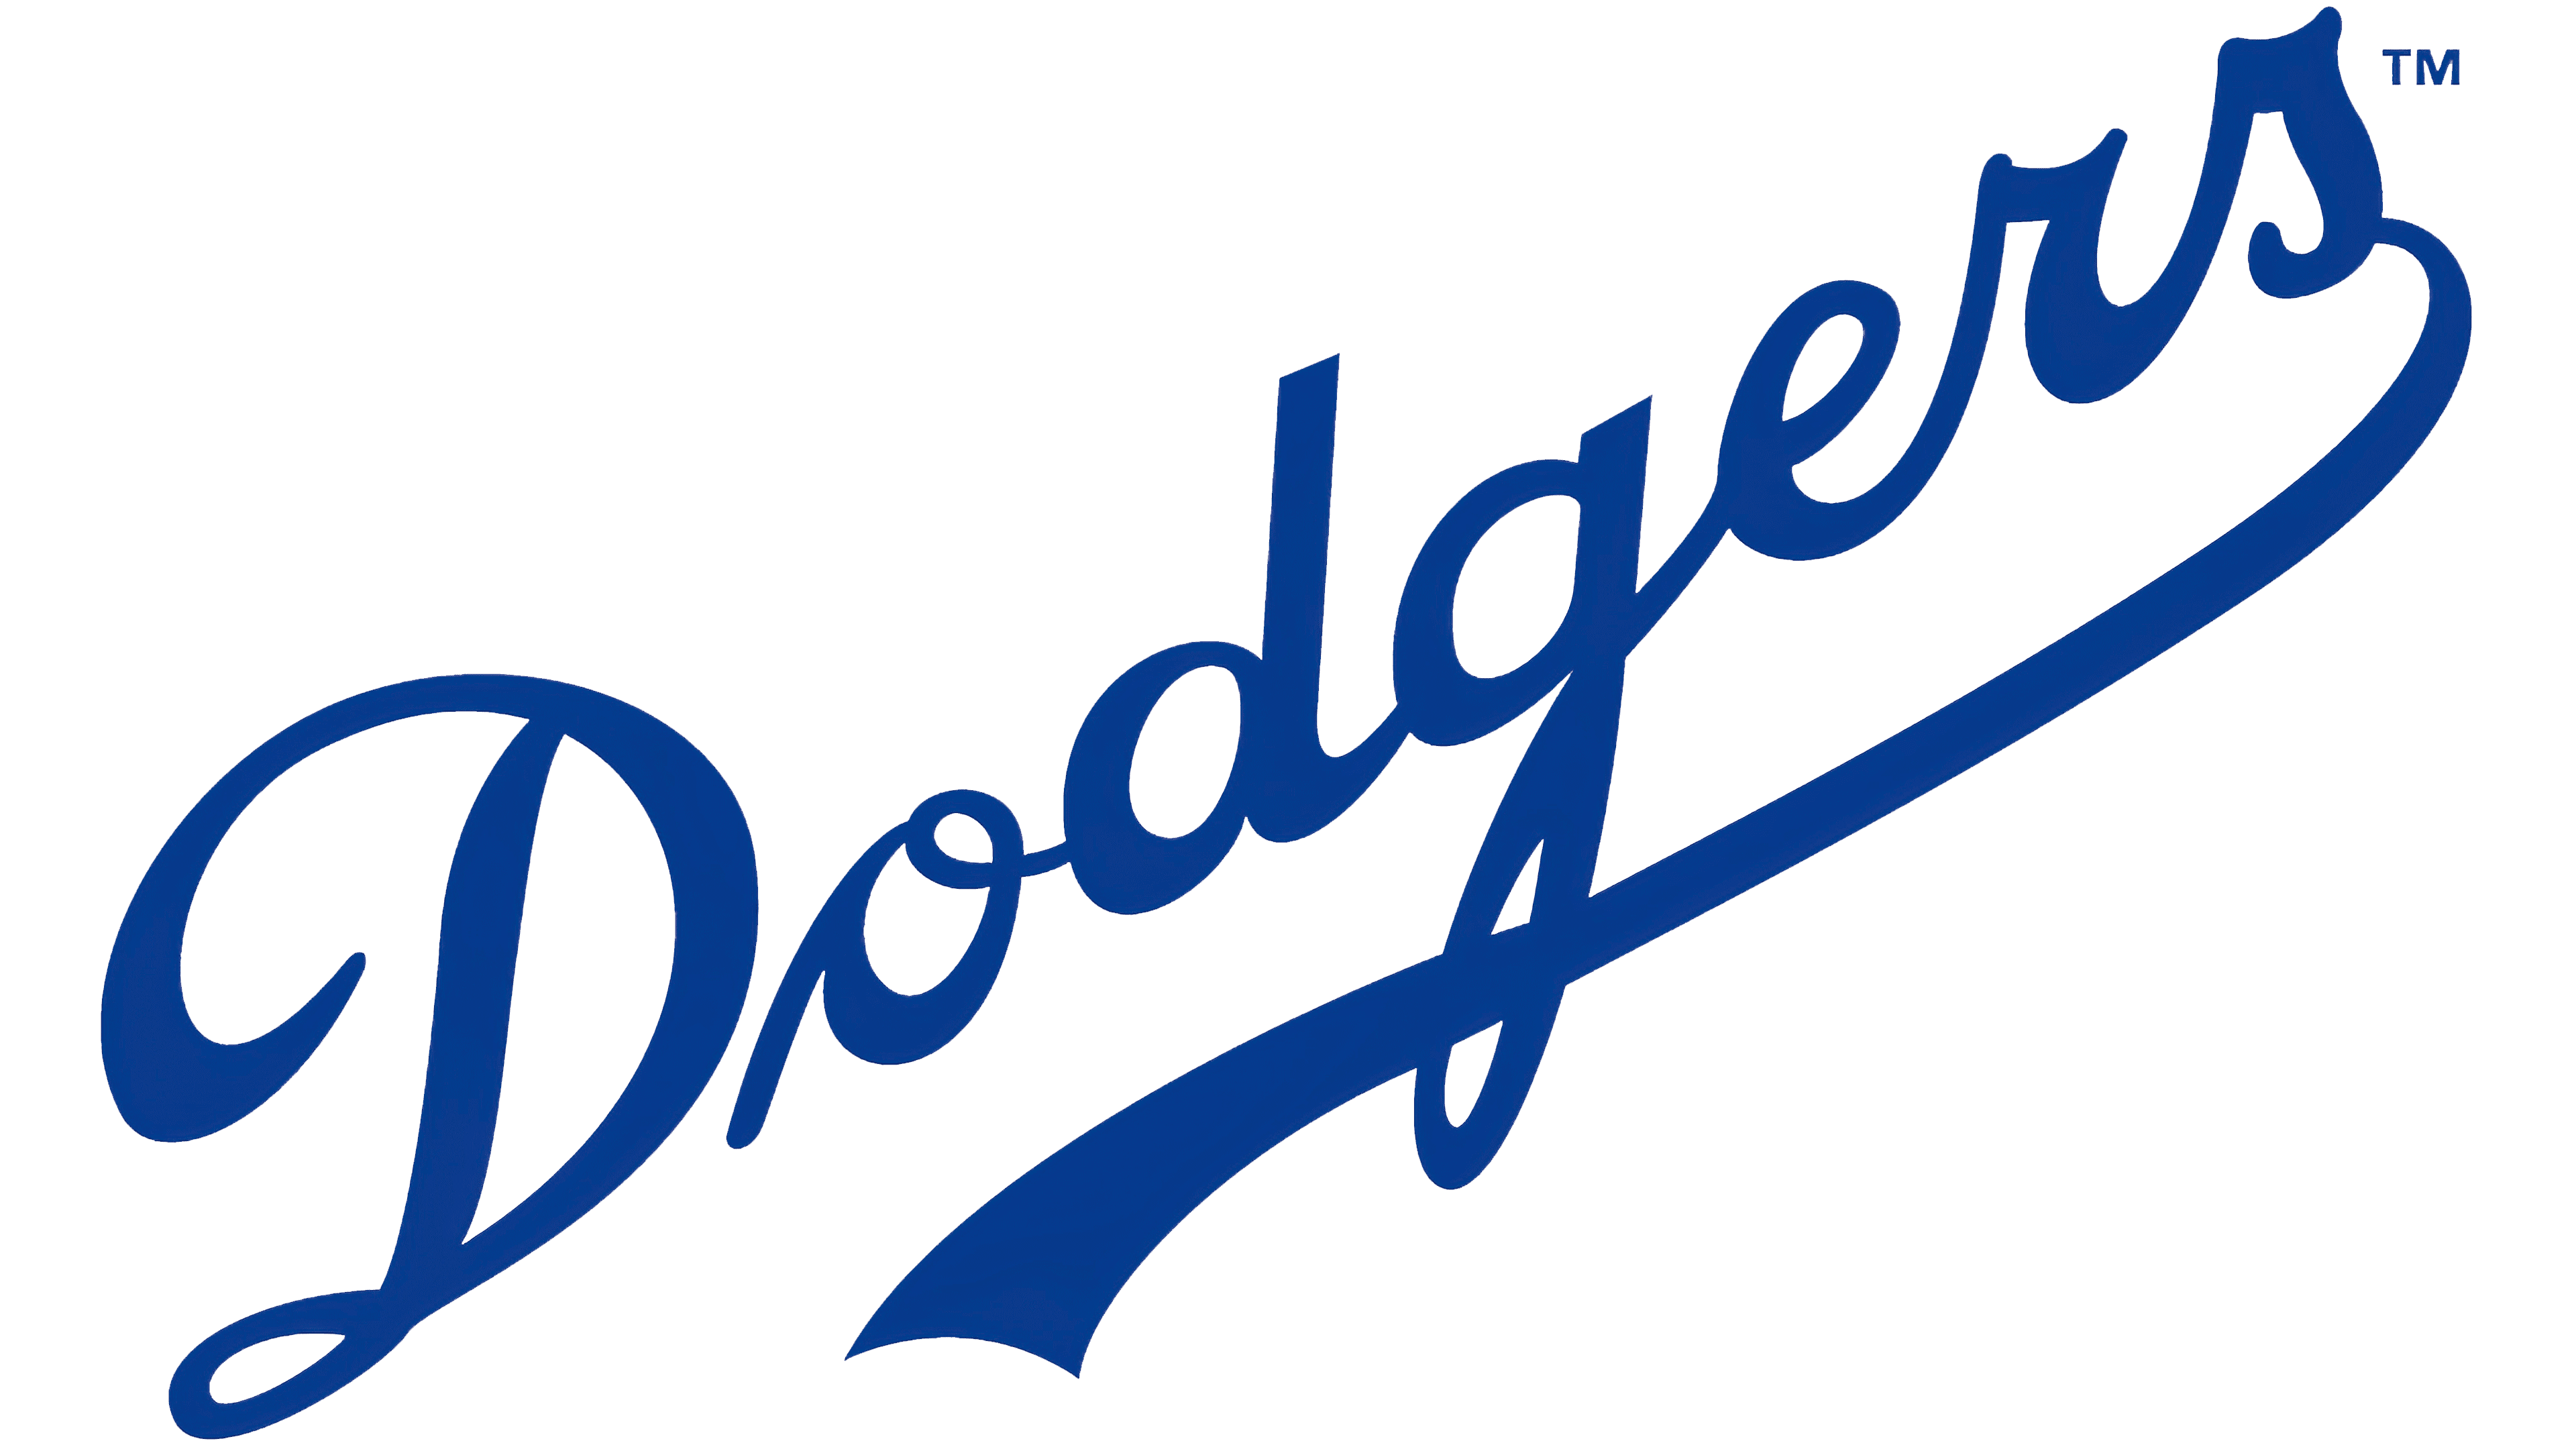 Los angeles dodgers. La Dodgers logo. Лос Анджелес Доджерс лого. Brooklyn Dodgers эмблема. La Dodgers logo White.